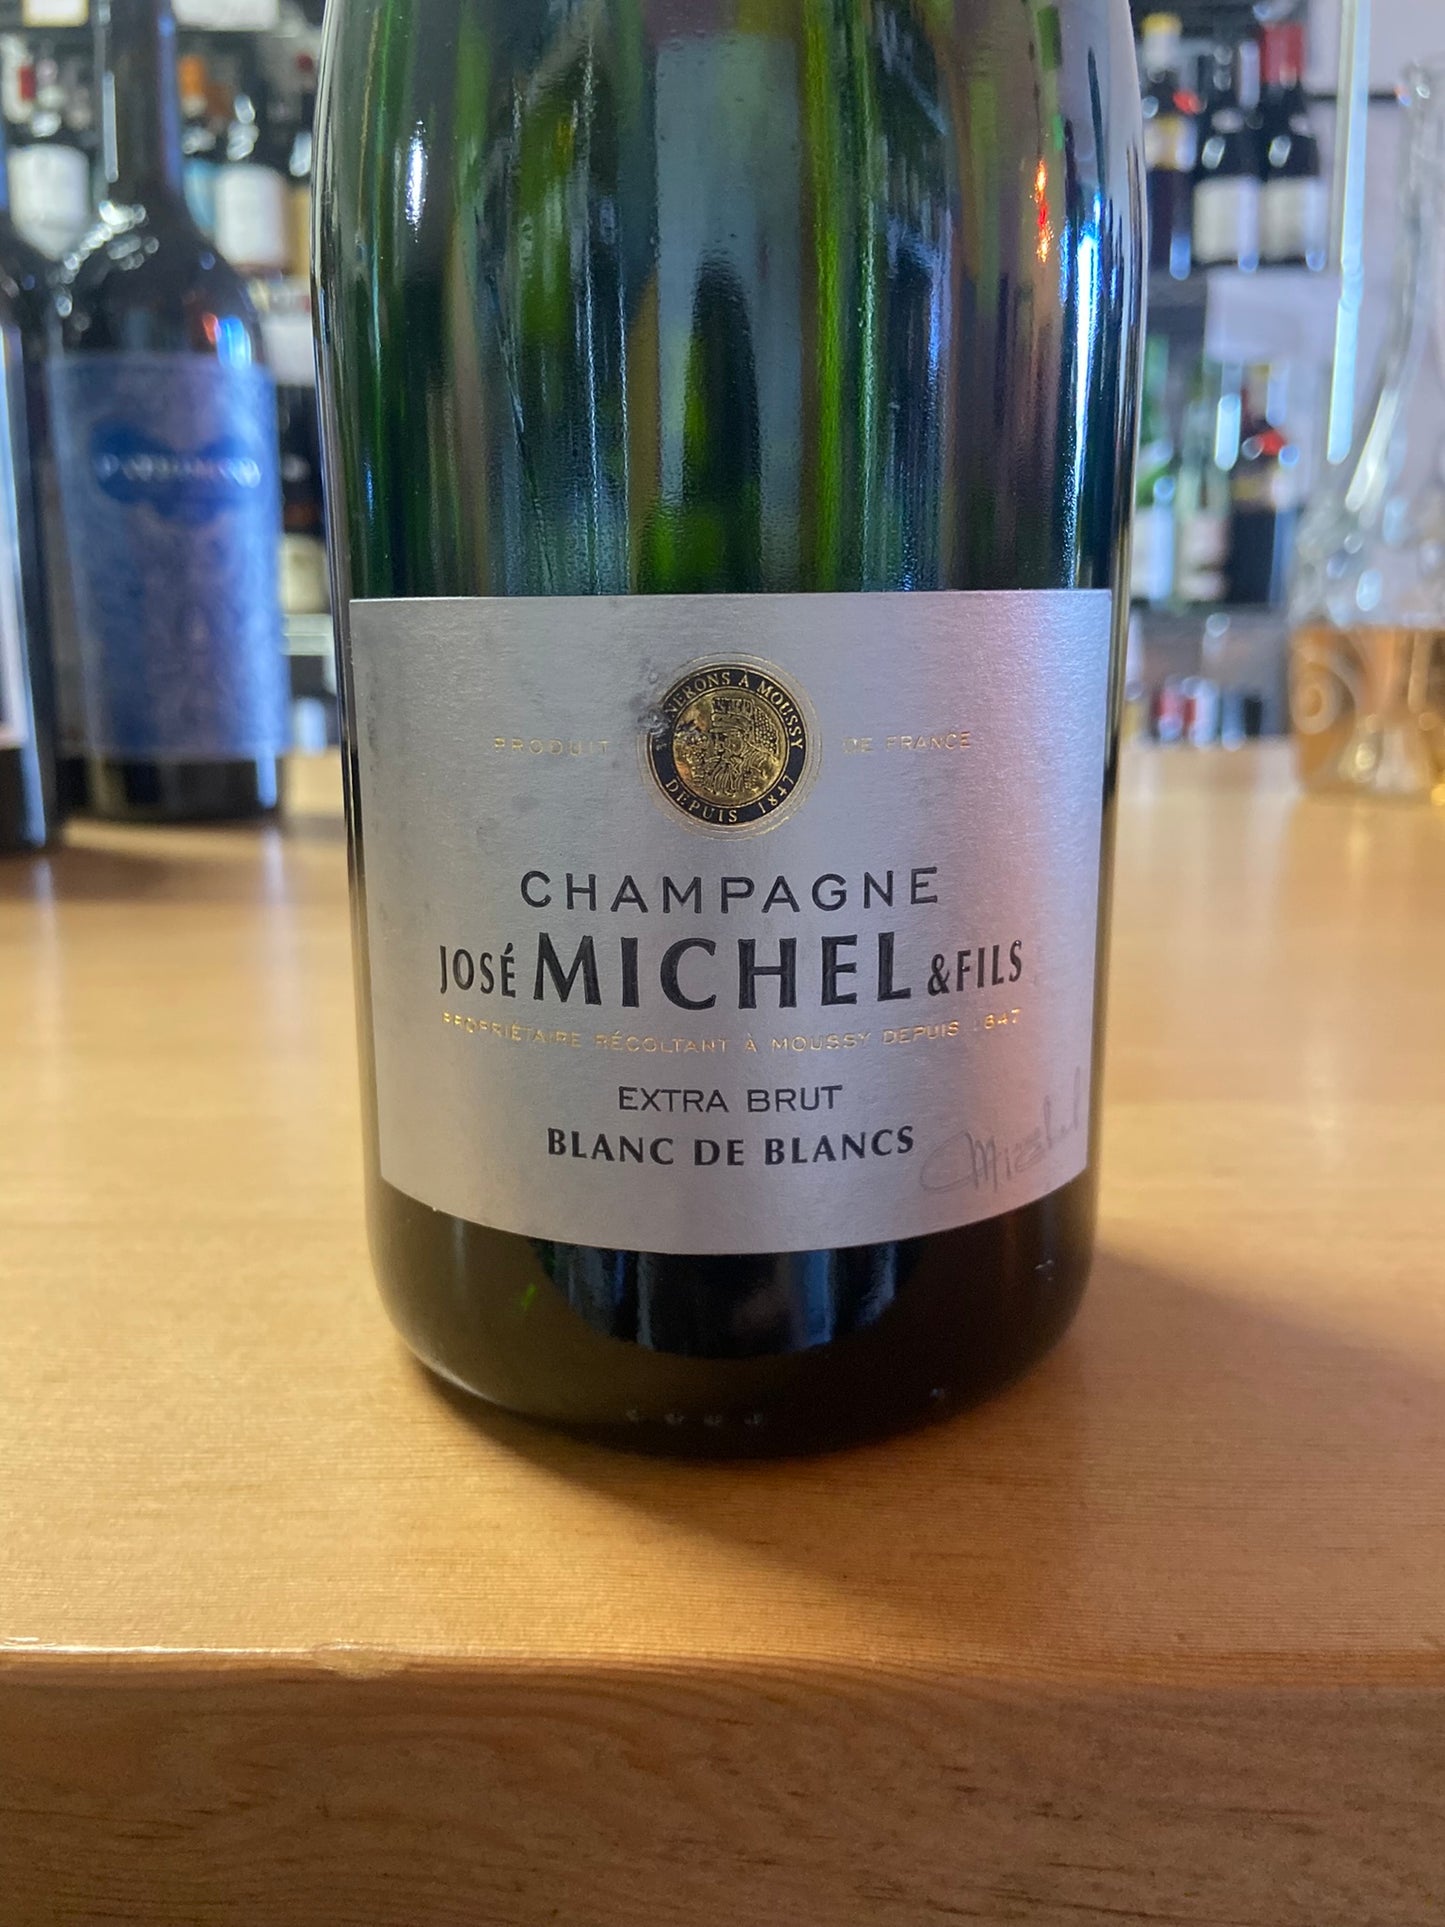 JOSE MICHEL & FILS NV Champagne 'Blanc de Blancs Brut' (Champagne, France)